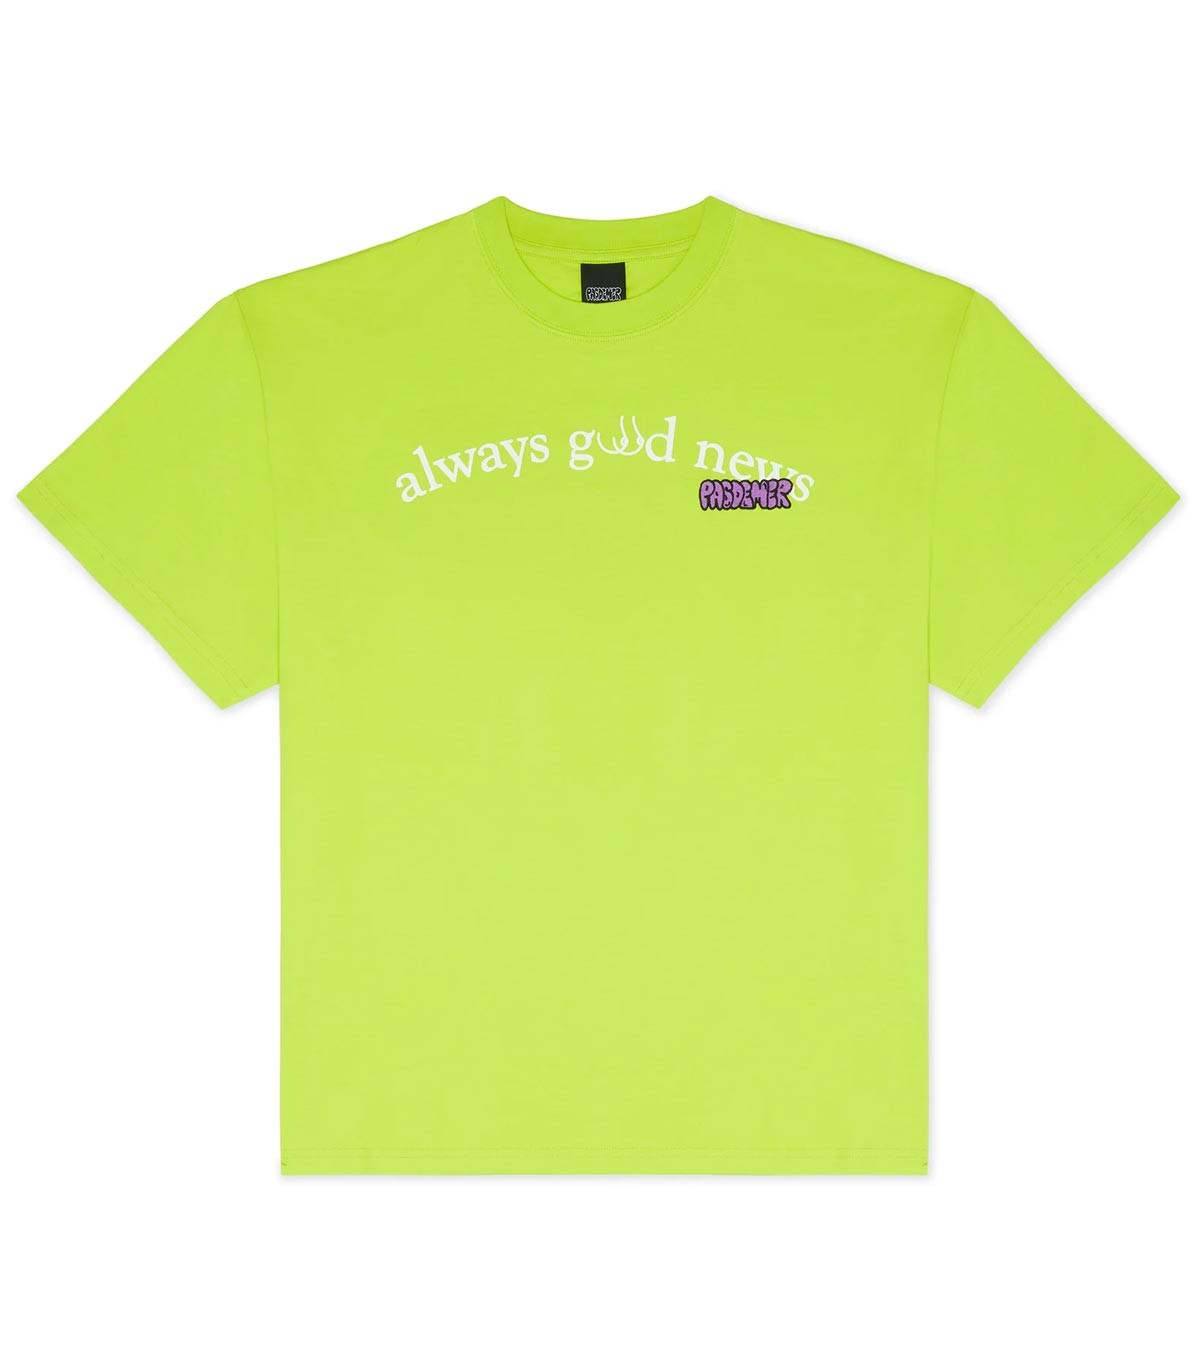 PASDEMER - Camiseta Good News - Verde